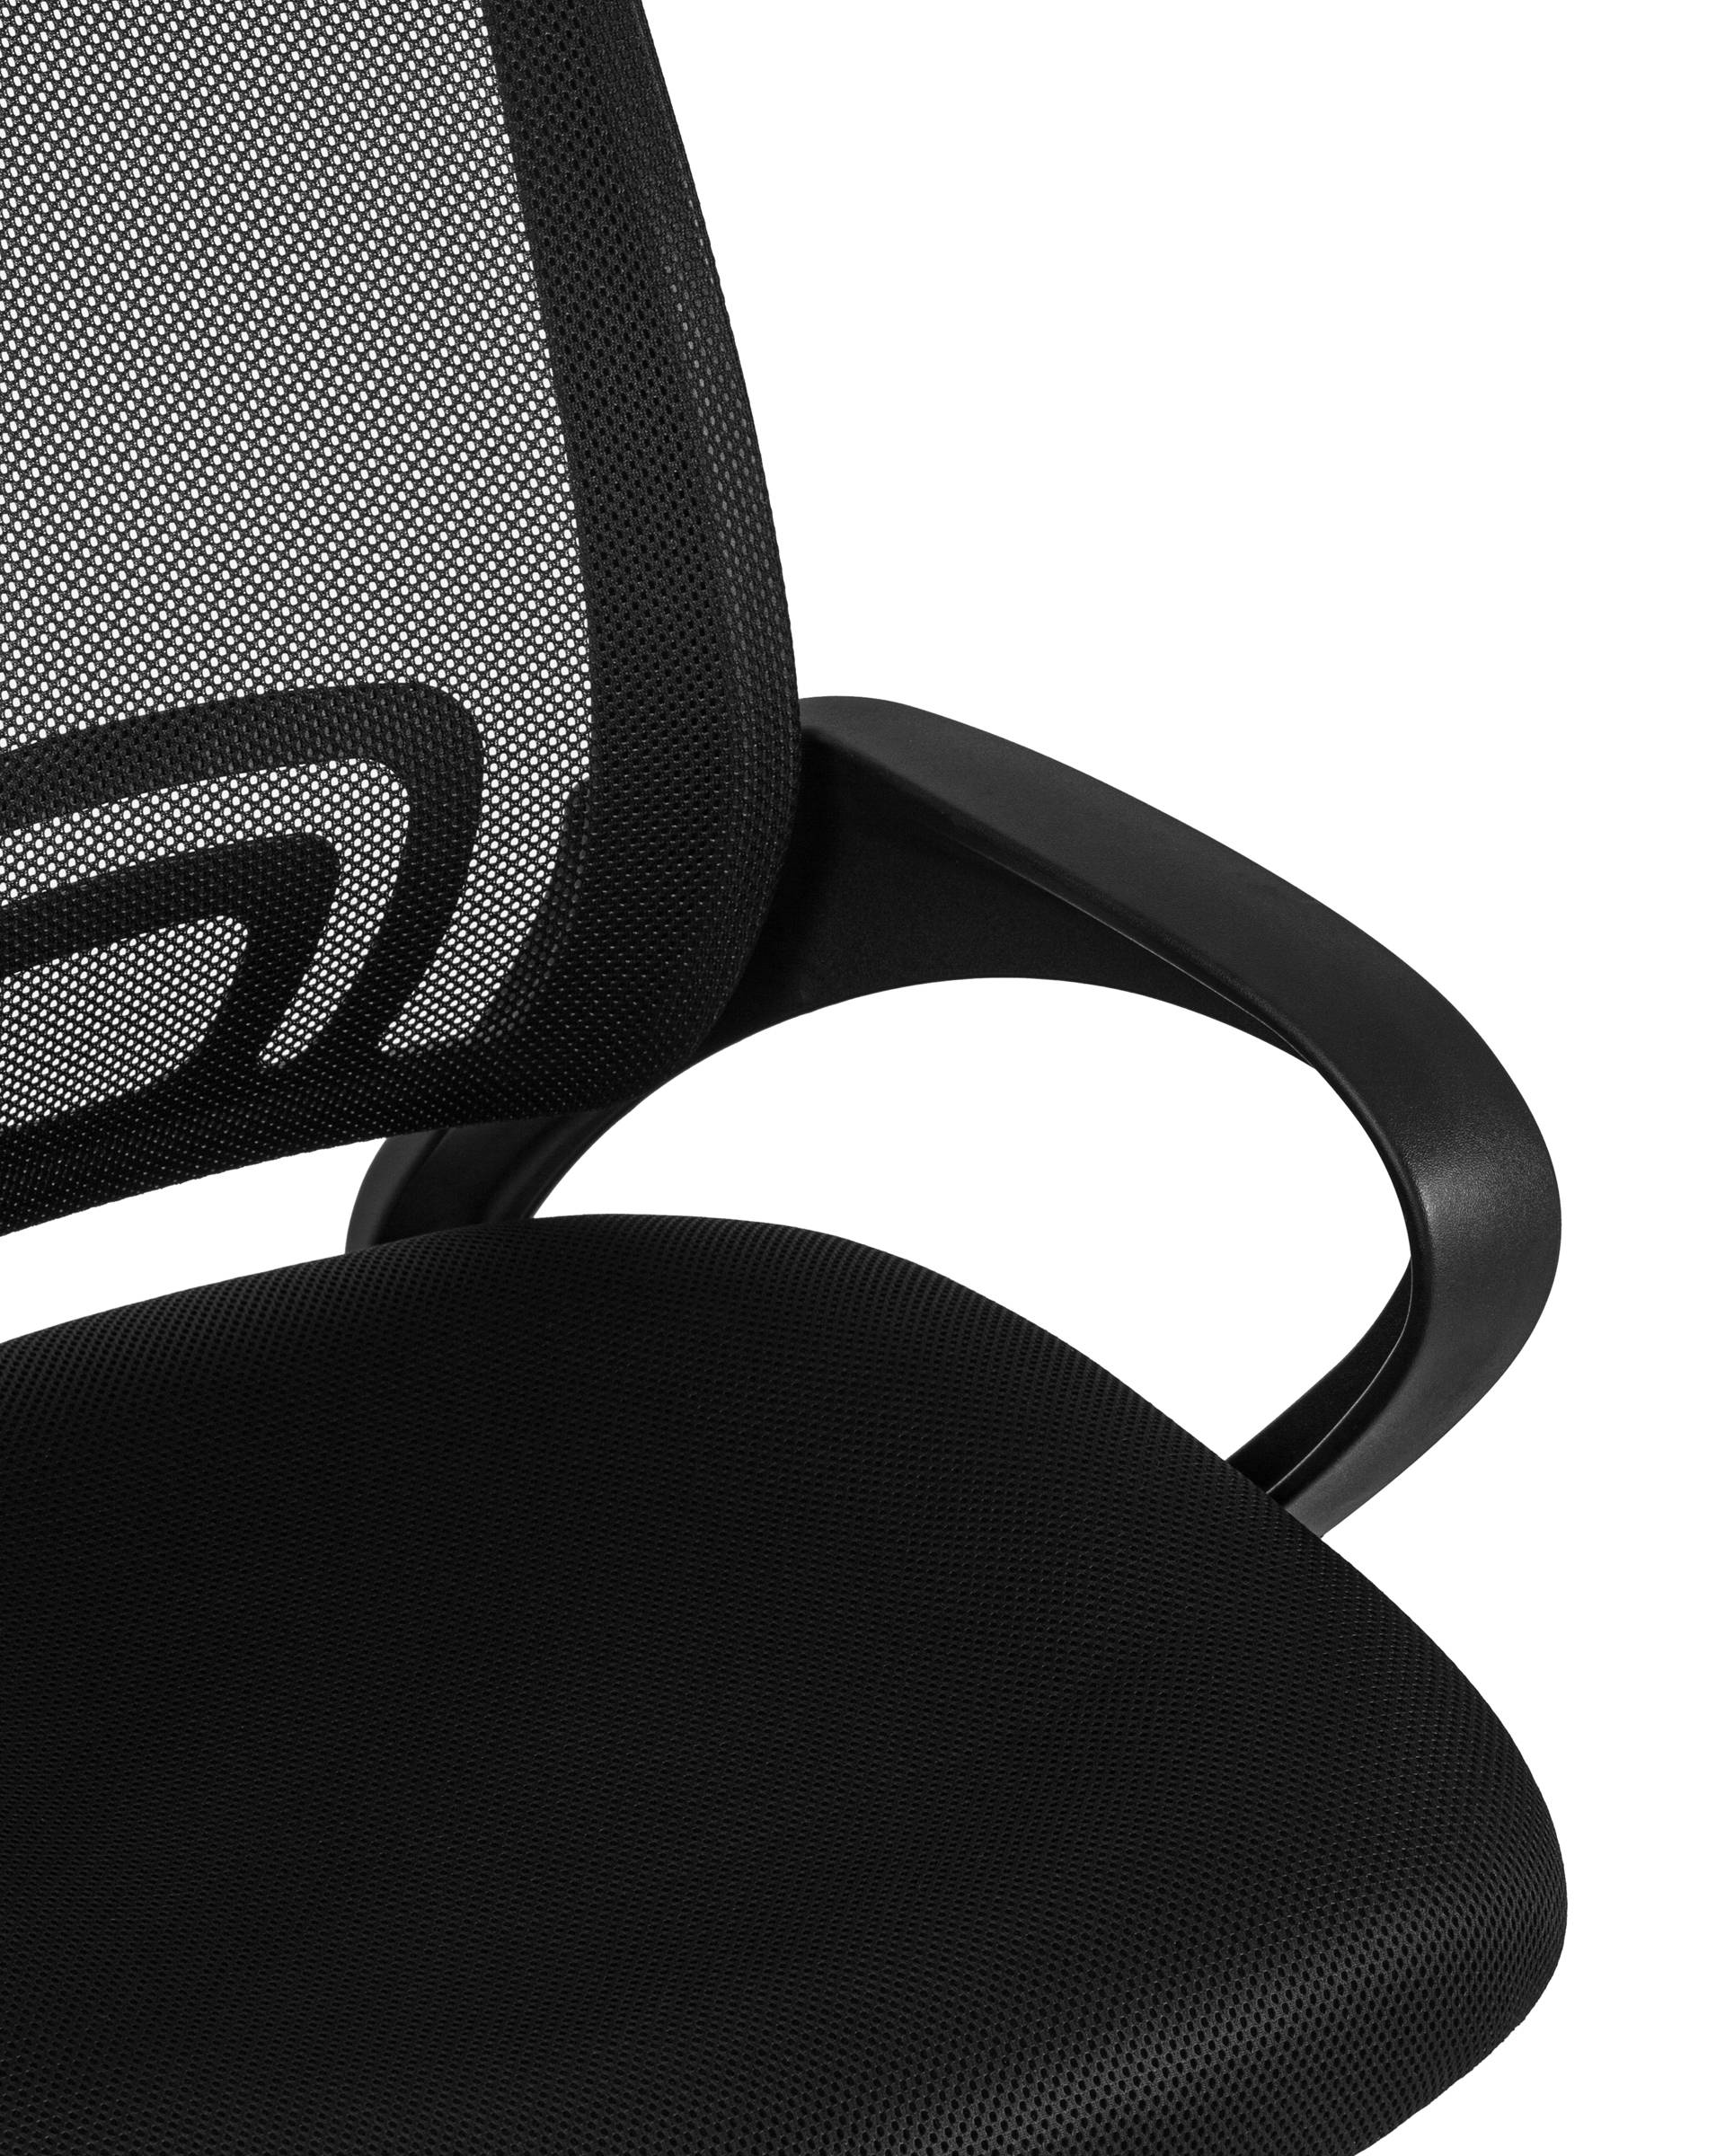 Кресло офисное TopChairs Simple черное из Италии